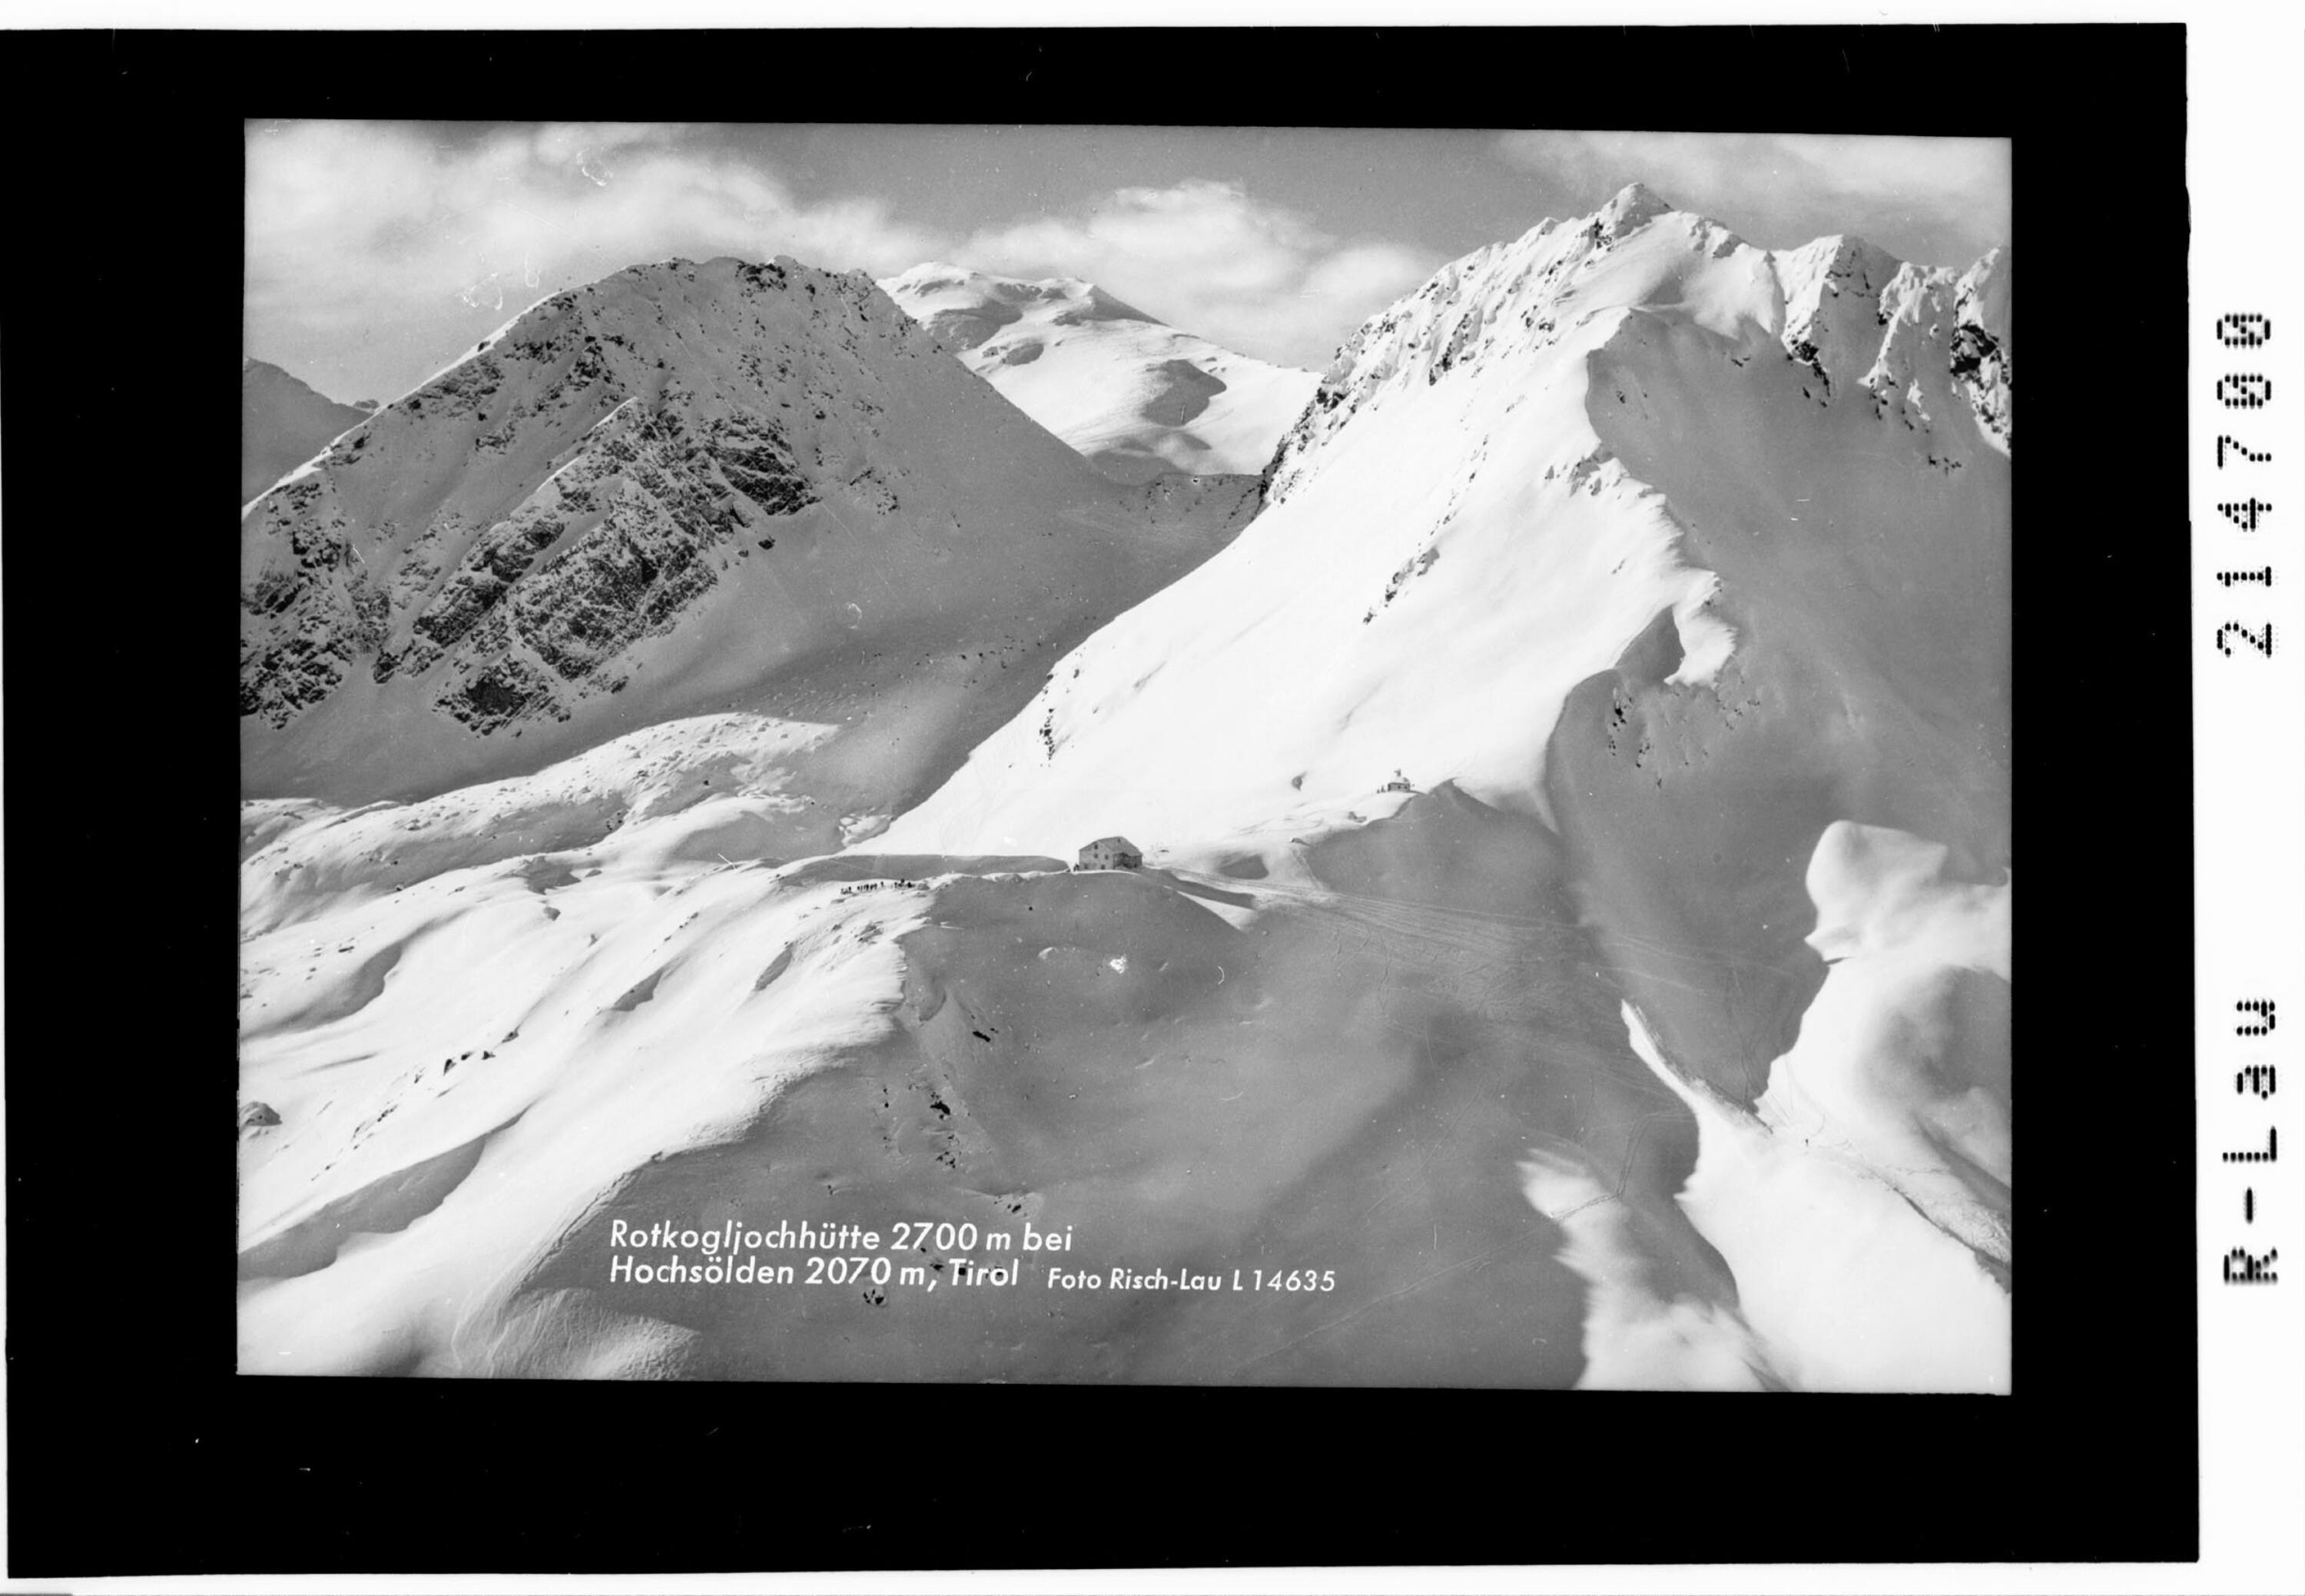 Rotkogljochhütte 2700 m bei Hochsölden 2070 m, Tirol></div>


    <hr>
    <div class=